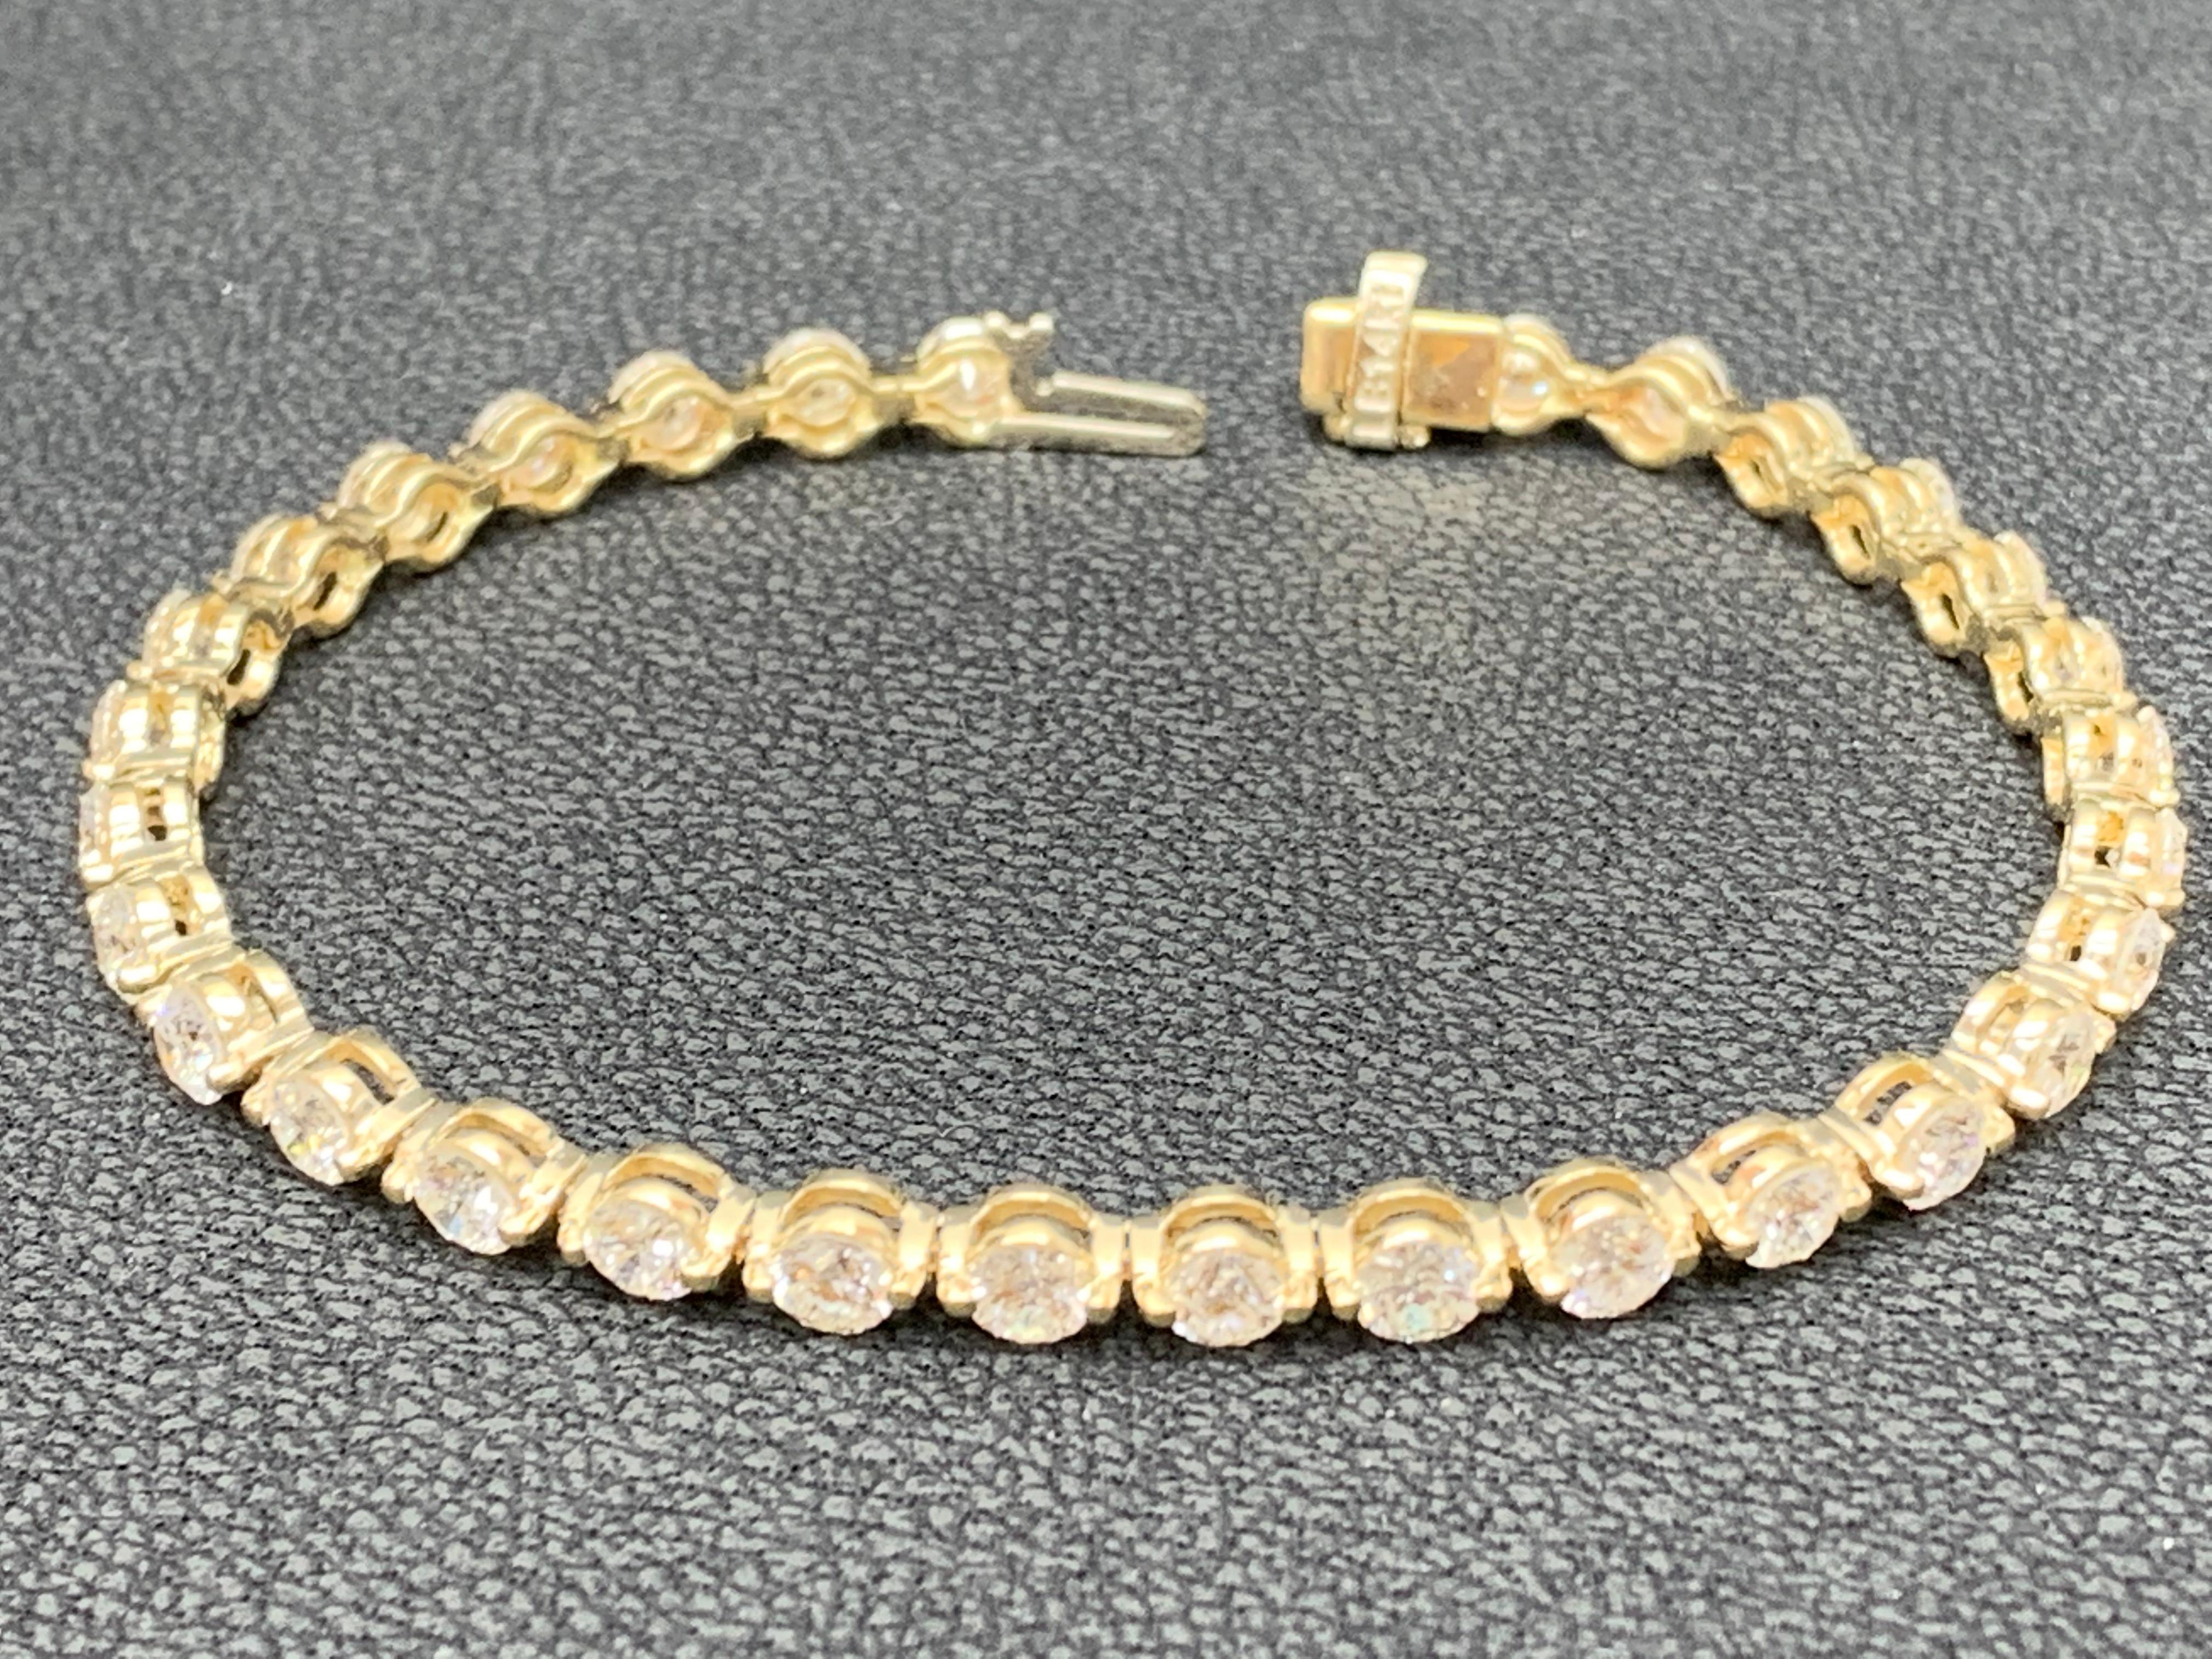 7.01 Carat Brilliant Cut Diamond Bracelet in 14k Yellow Gold For Sale 7